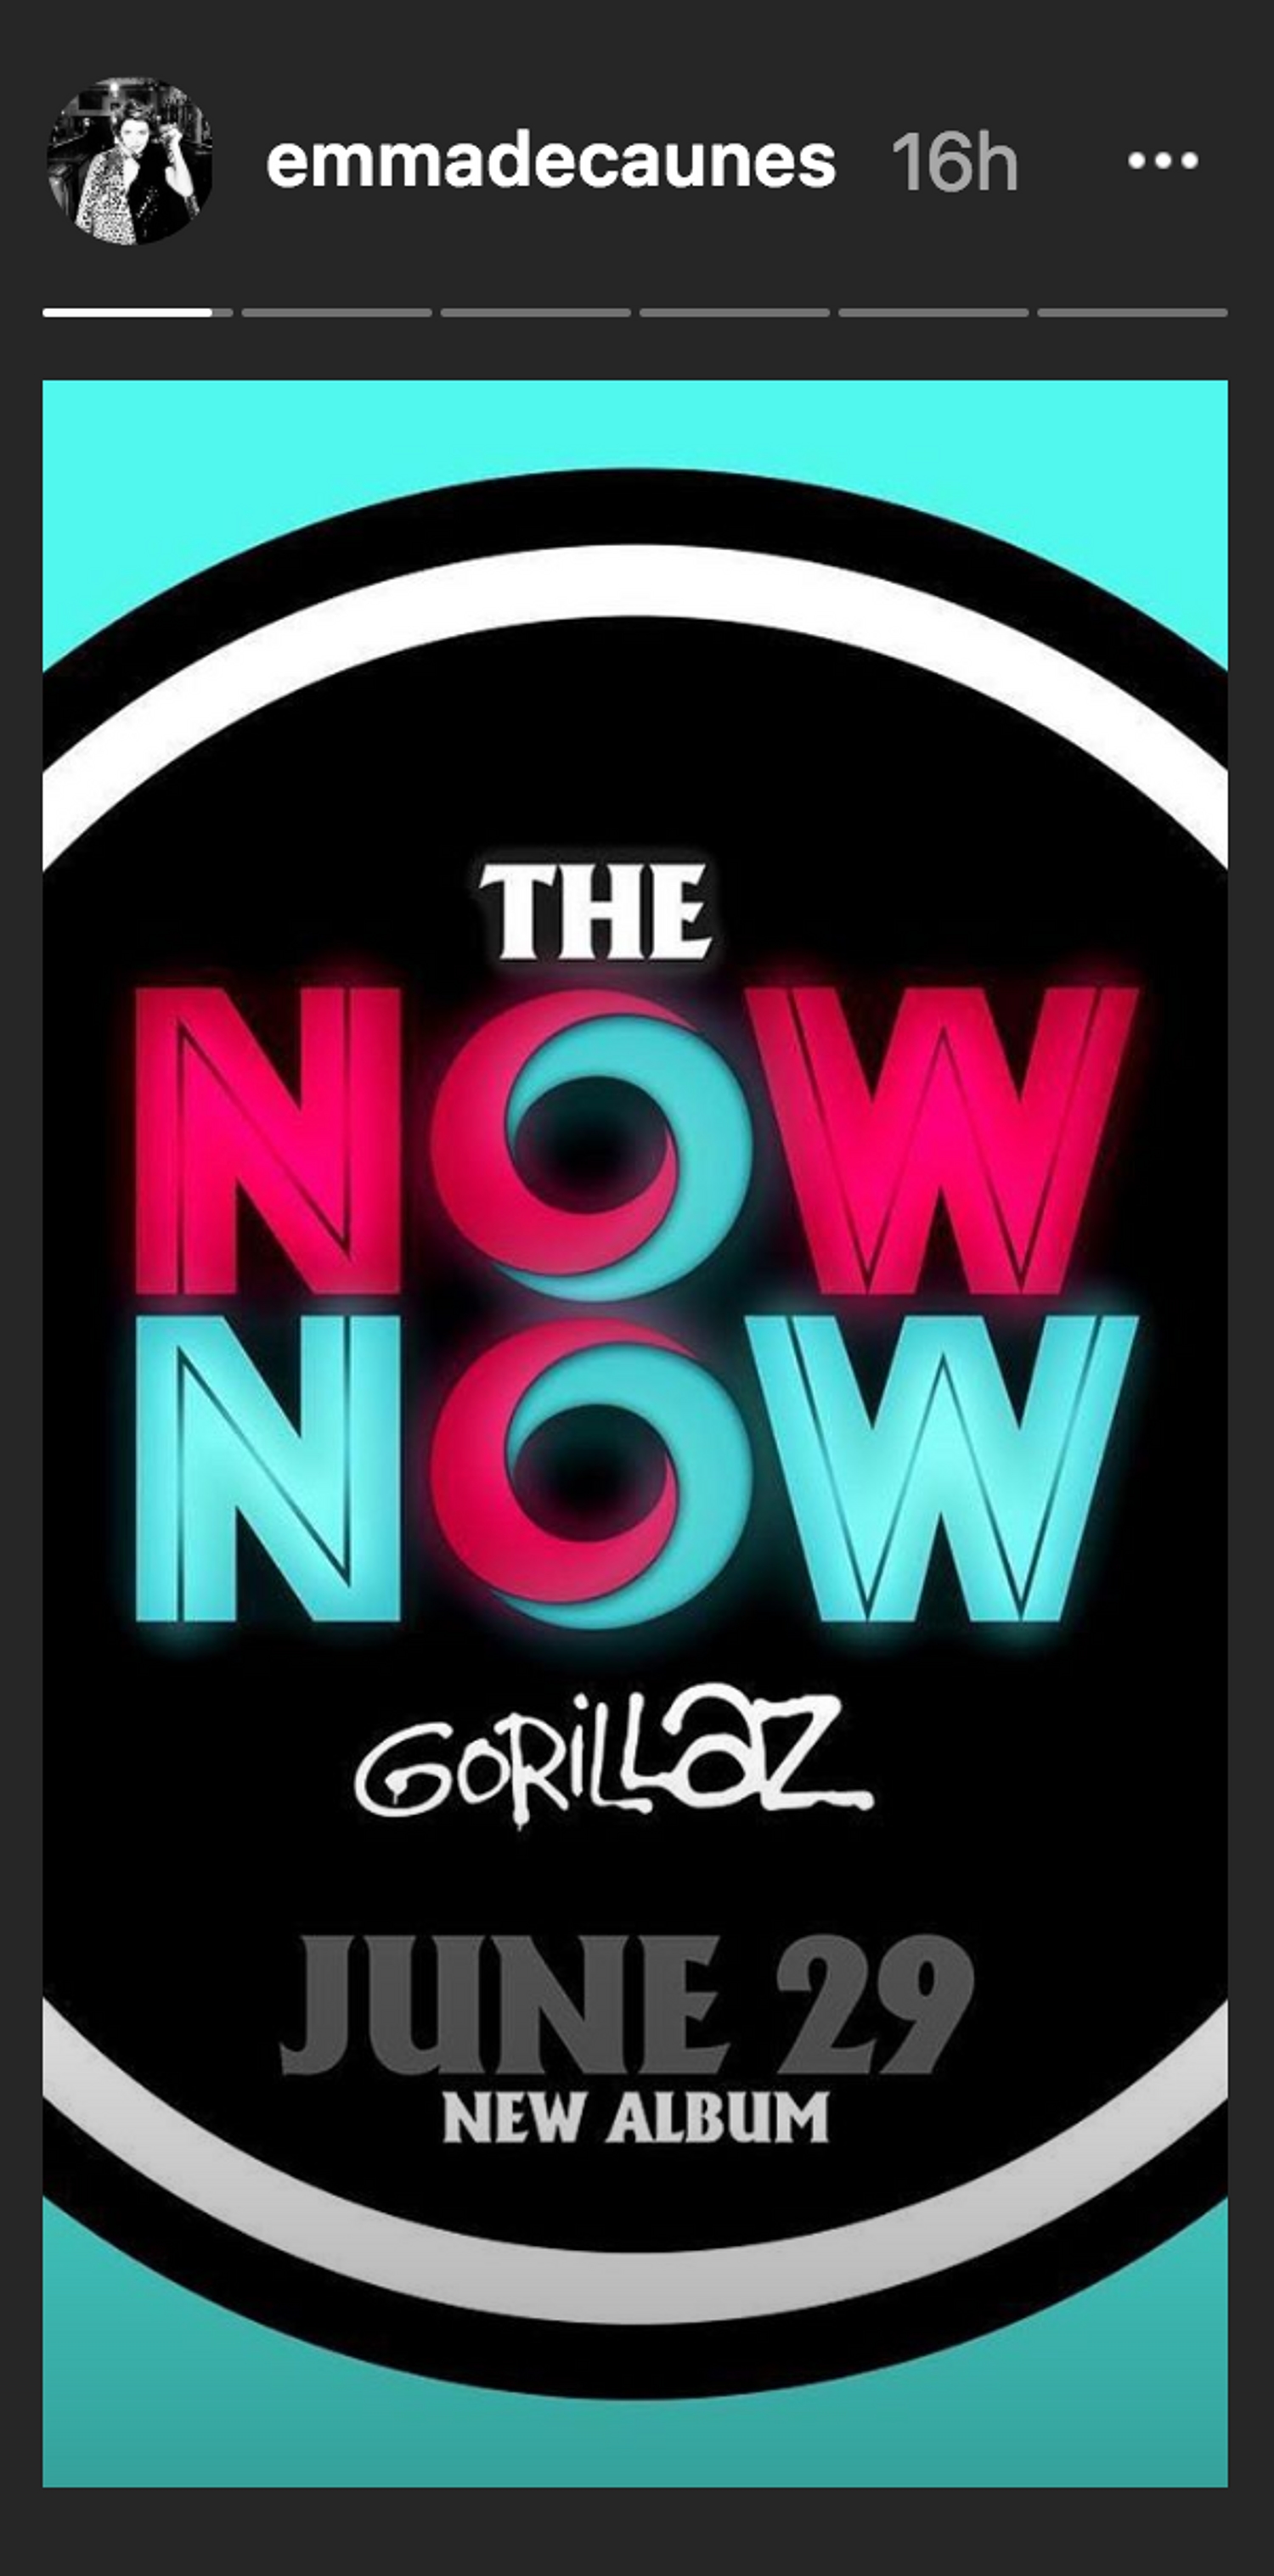 Gorillaz are releasing a new album next month!